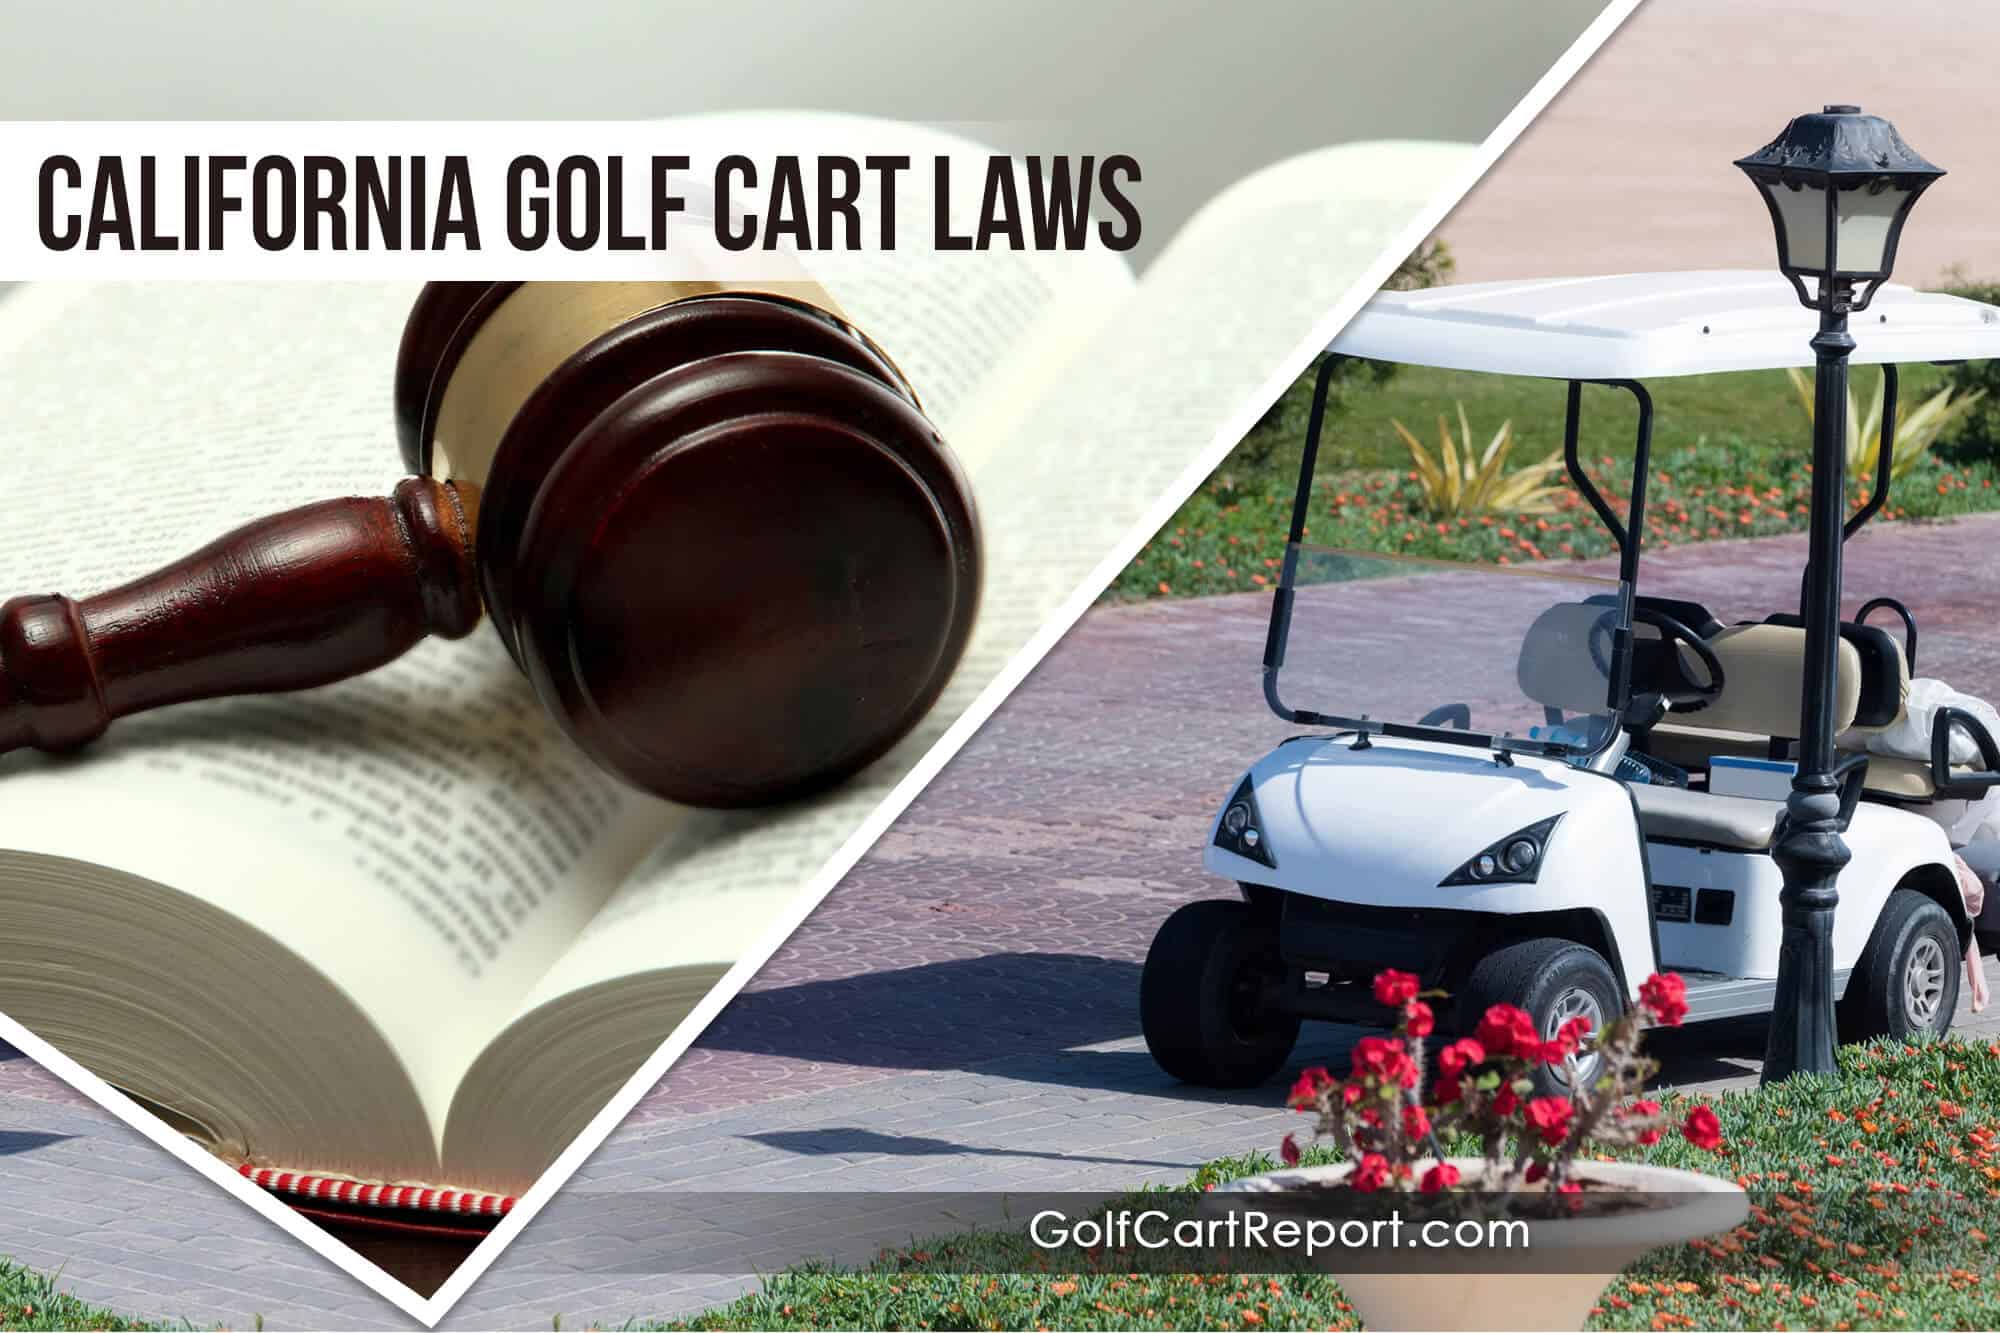 California golf cart laws